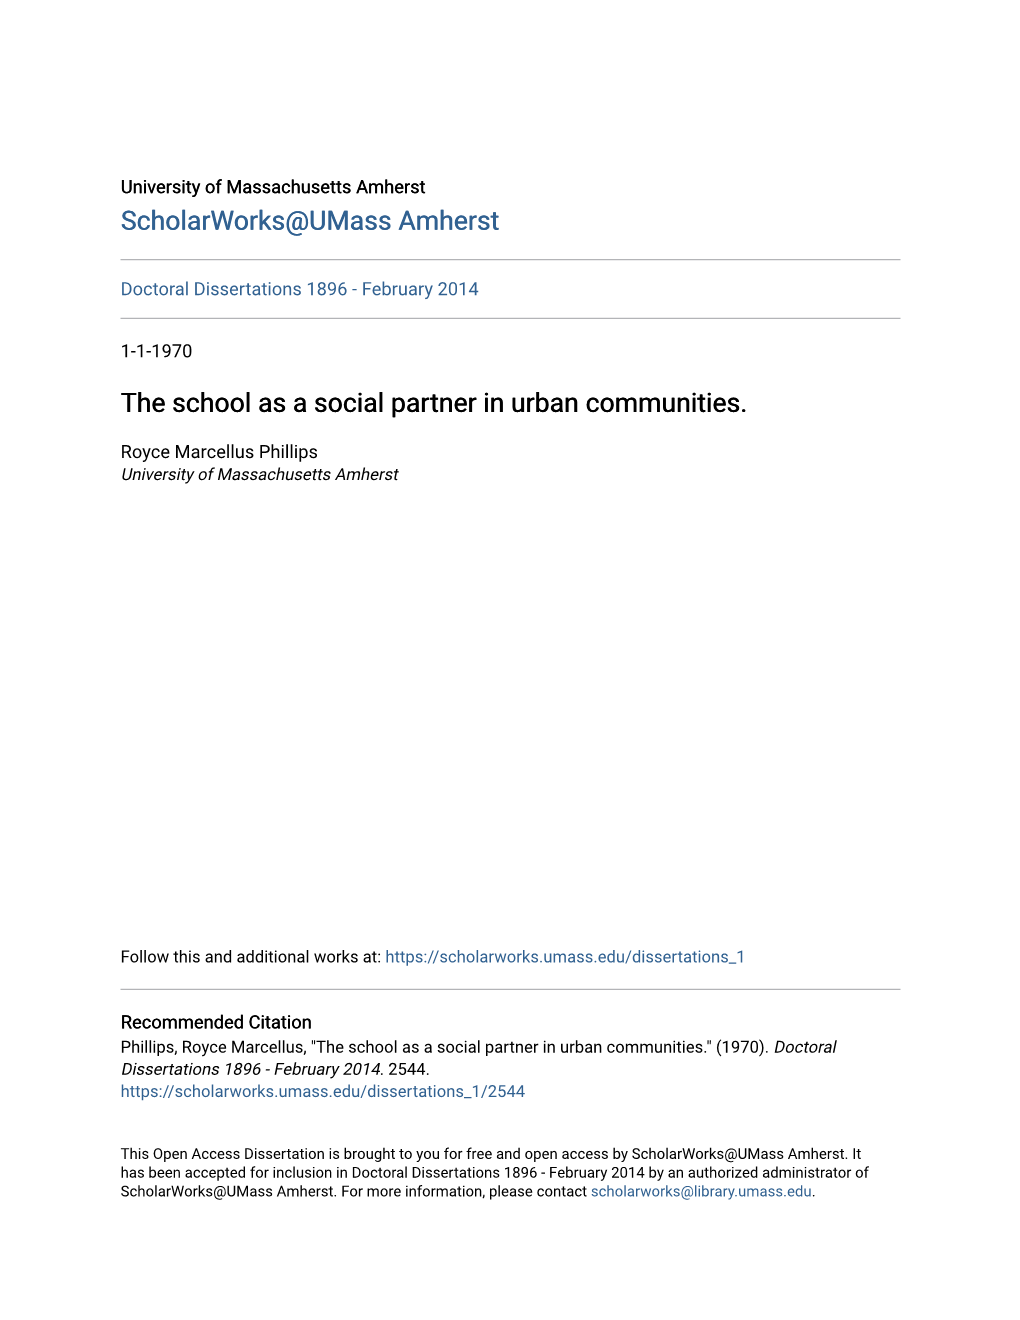 The School As a Social Partner in Urban Communities